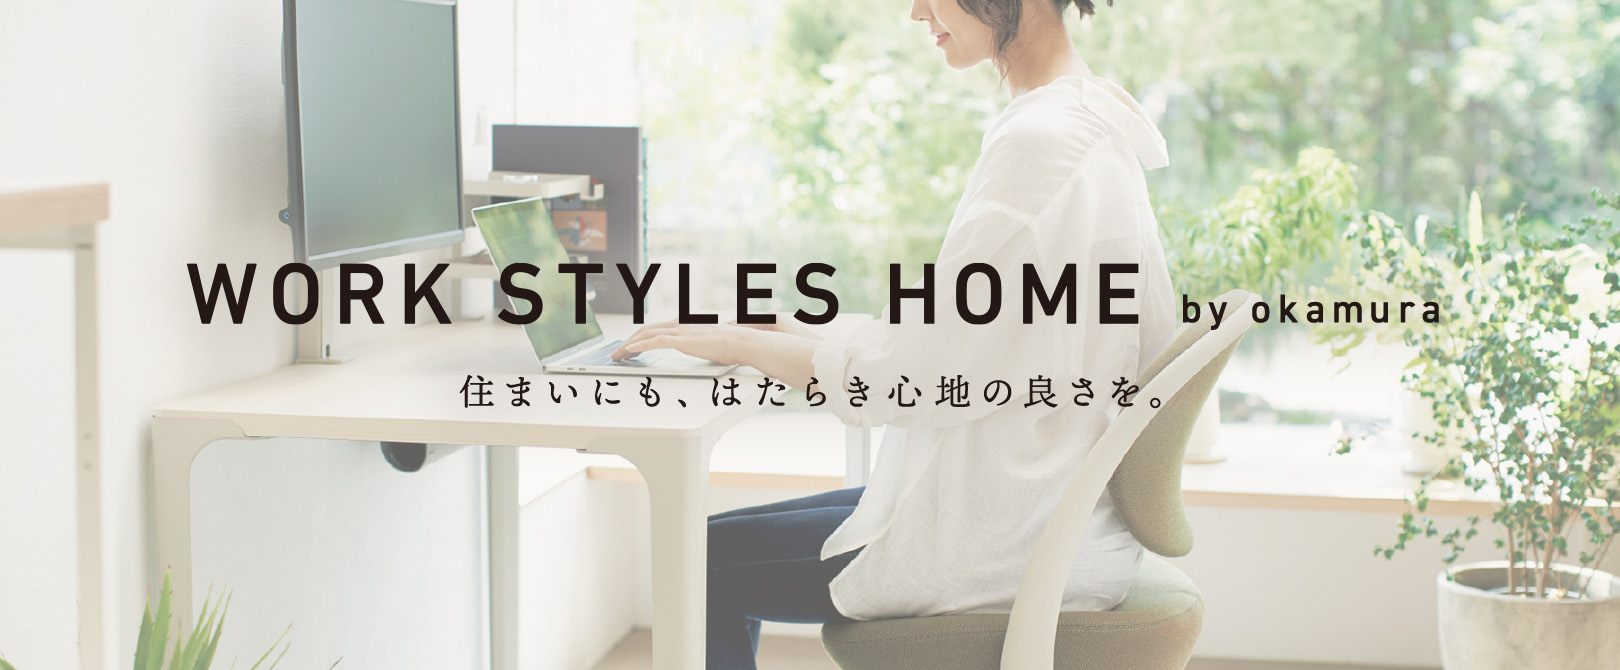 WORK STYLES HOME by okamura